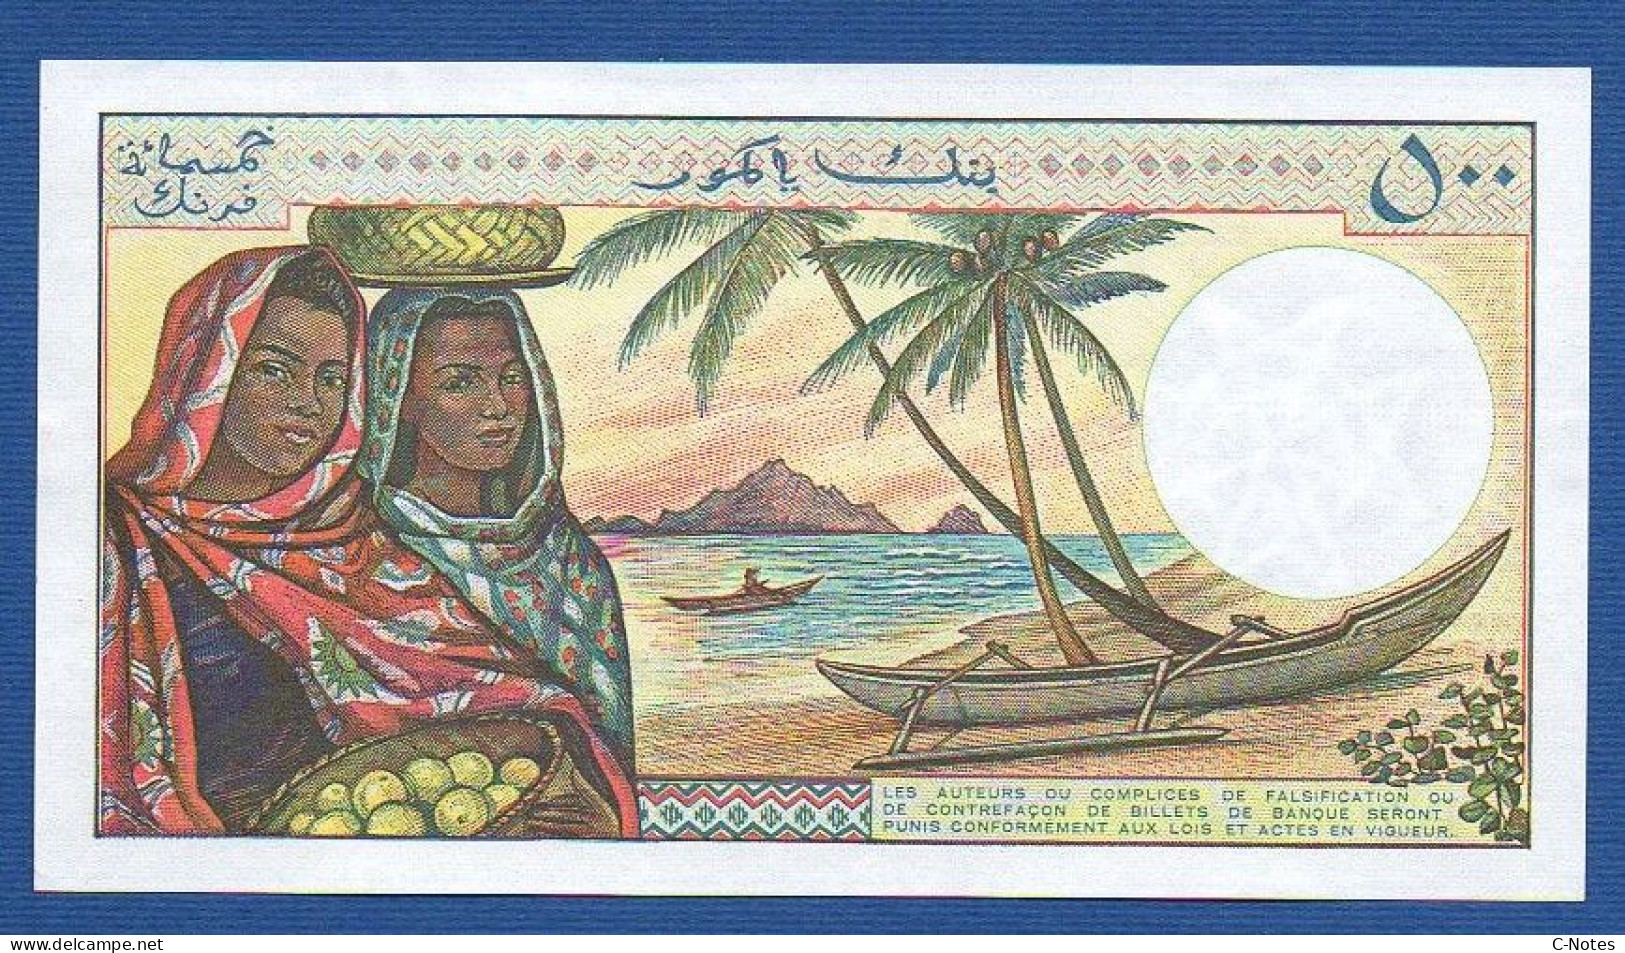 COMOROS - P.10a2 – 500 Francs ND (1984 - 2004) UNC, S/n P.2 74378 - Comoren